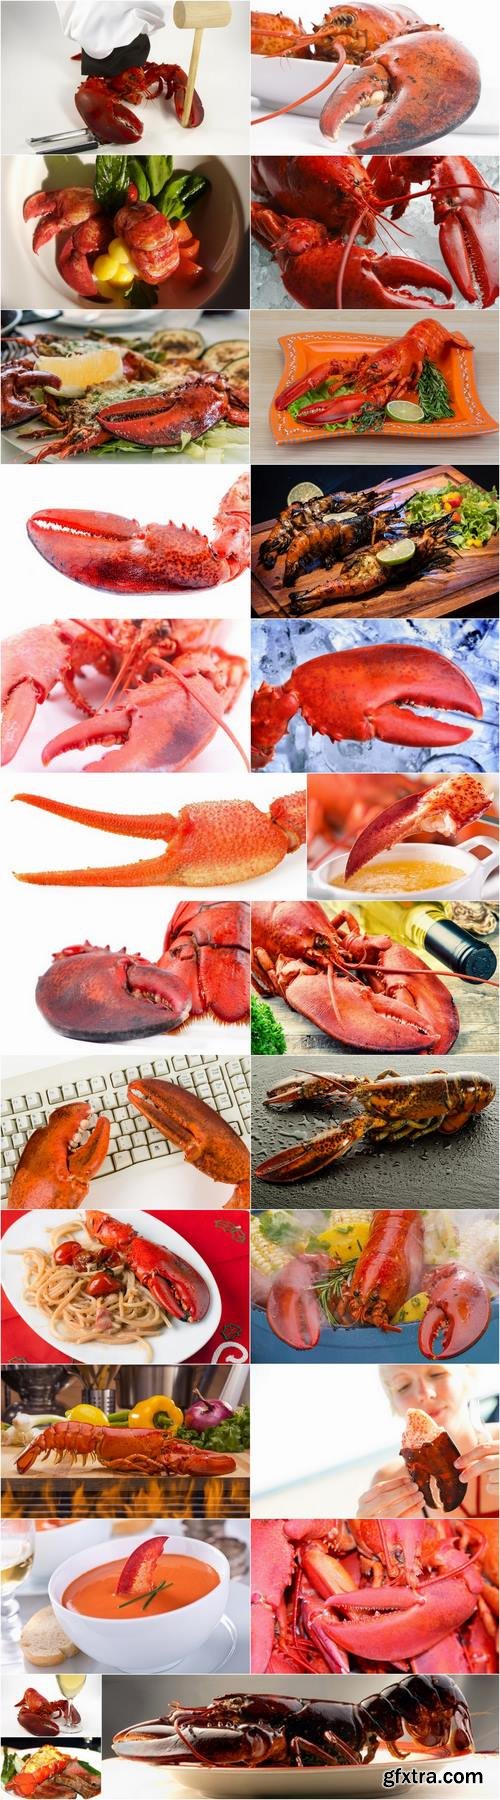 Lobster chela cancer boiled seafood 25 HQ Jpeg